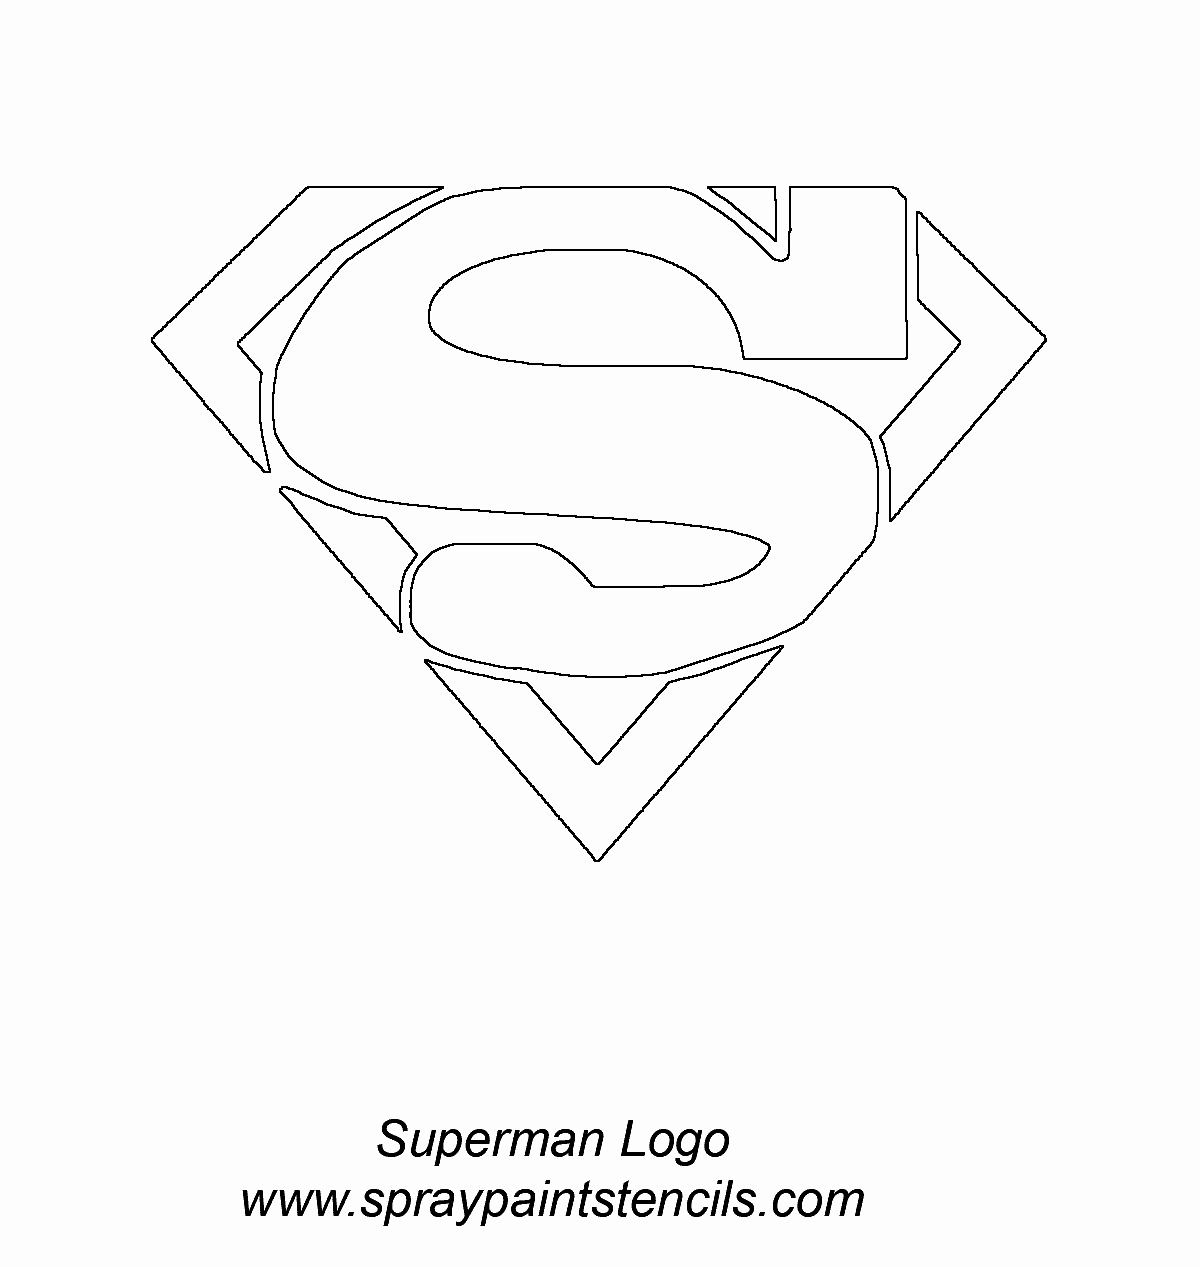 superman pumpkin stencil printable luxury superman logo pumpkin carving stencil superman coasters of superman pumpkin stencil printable